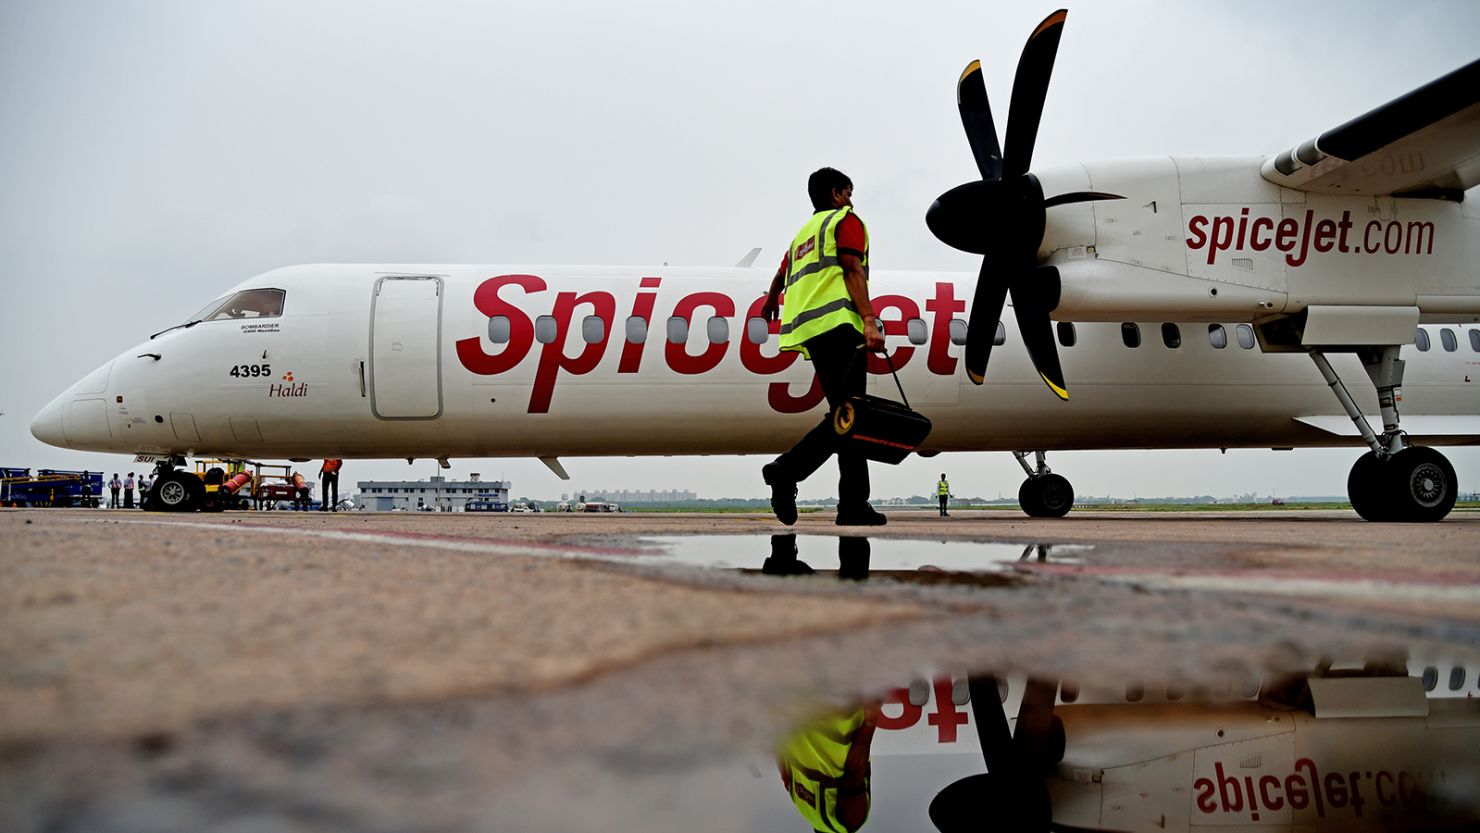 A SpiceJet plane at Indira Gandhi International Airport in Delhi, India, in August 2018.